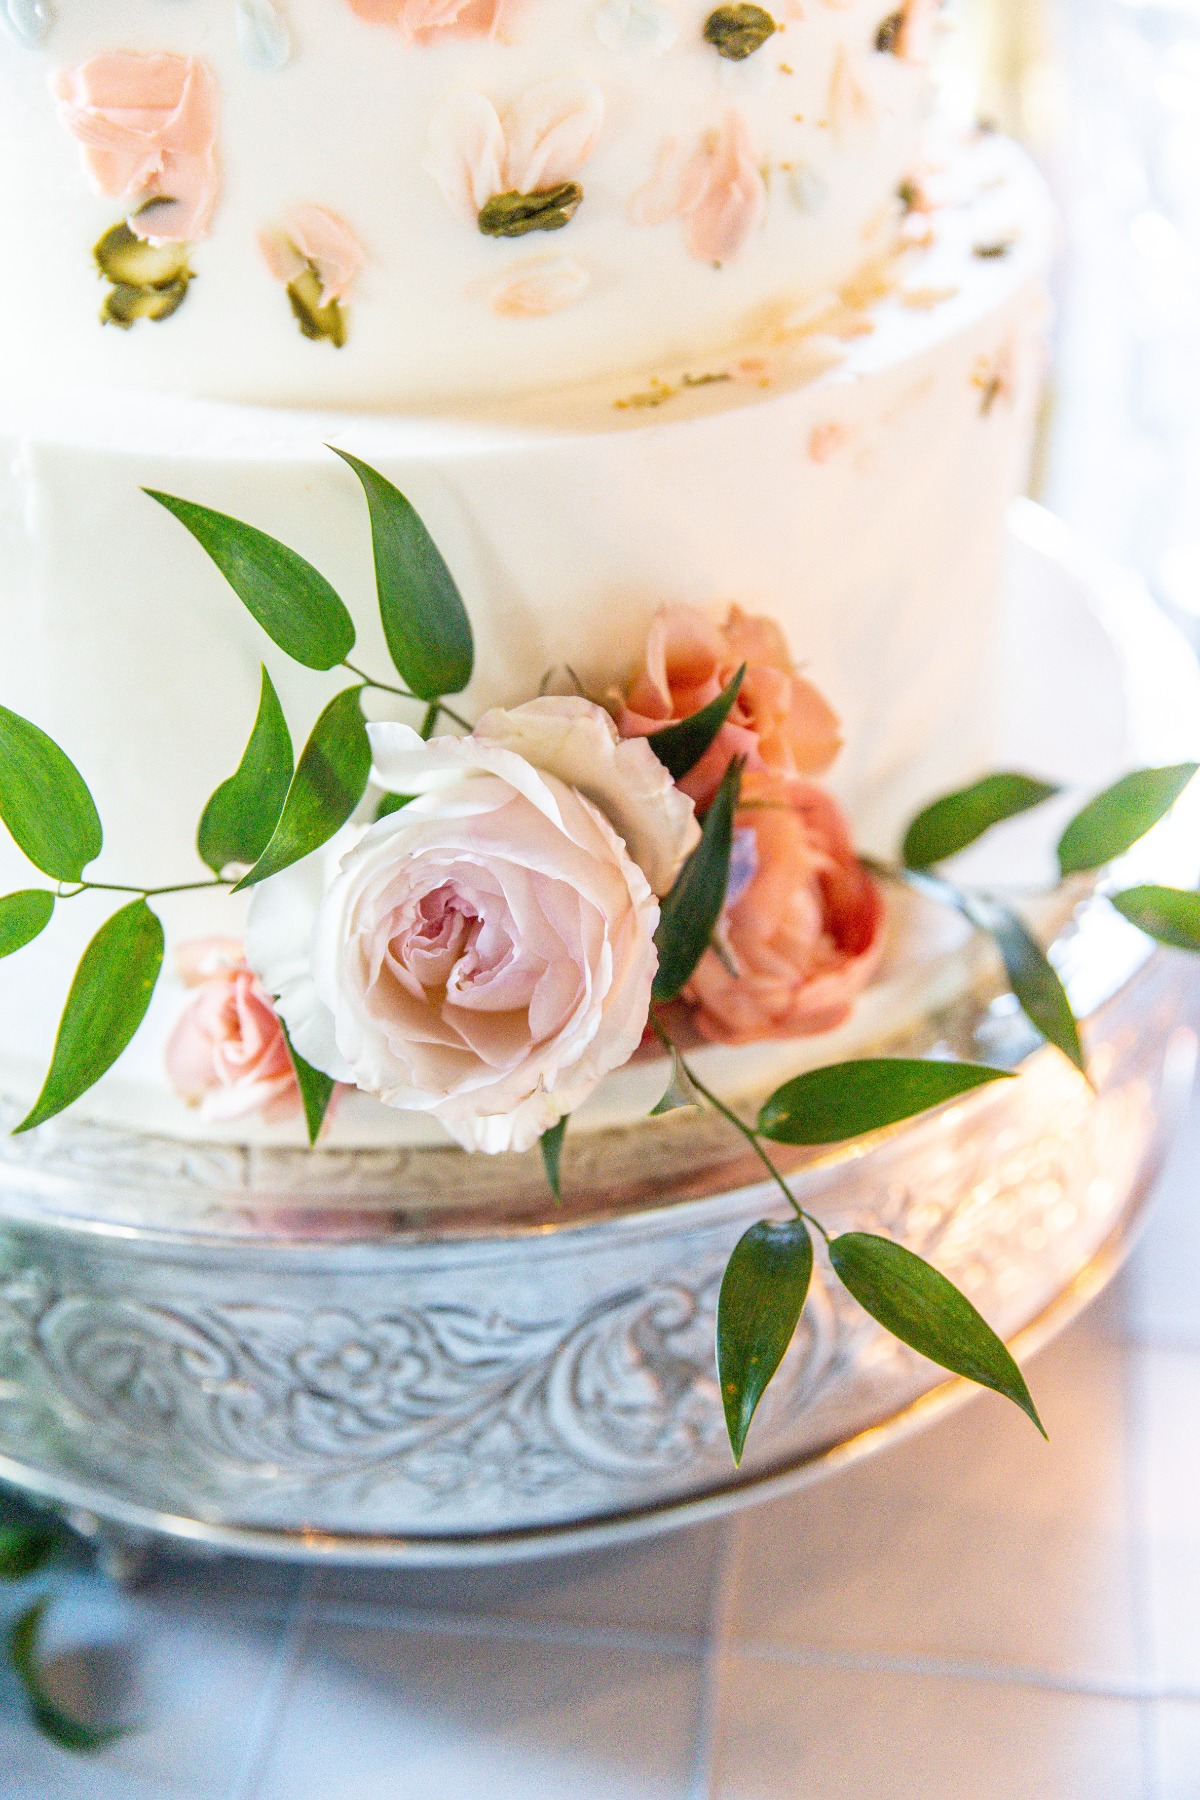 wedding cake with fresh flowers